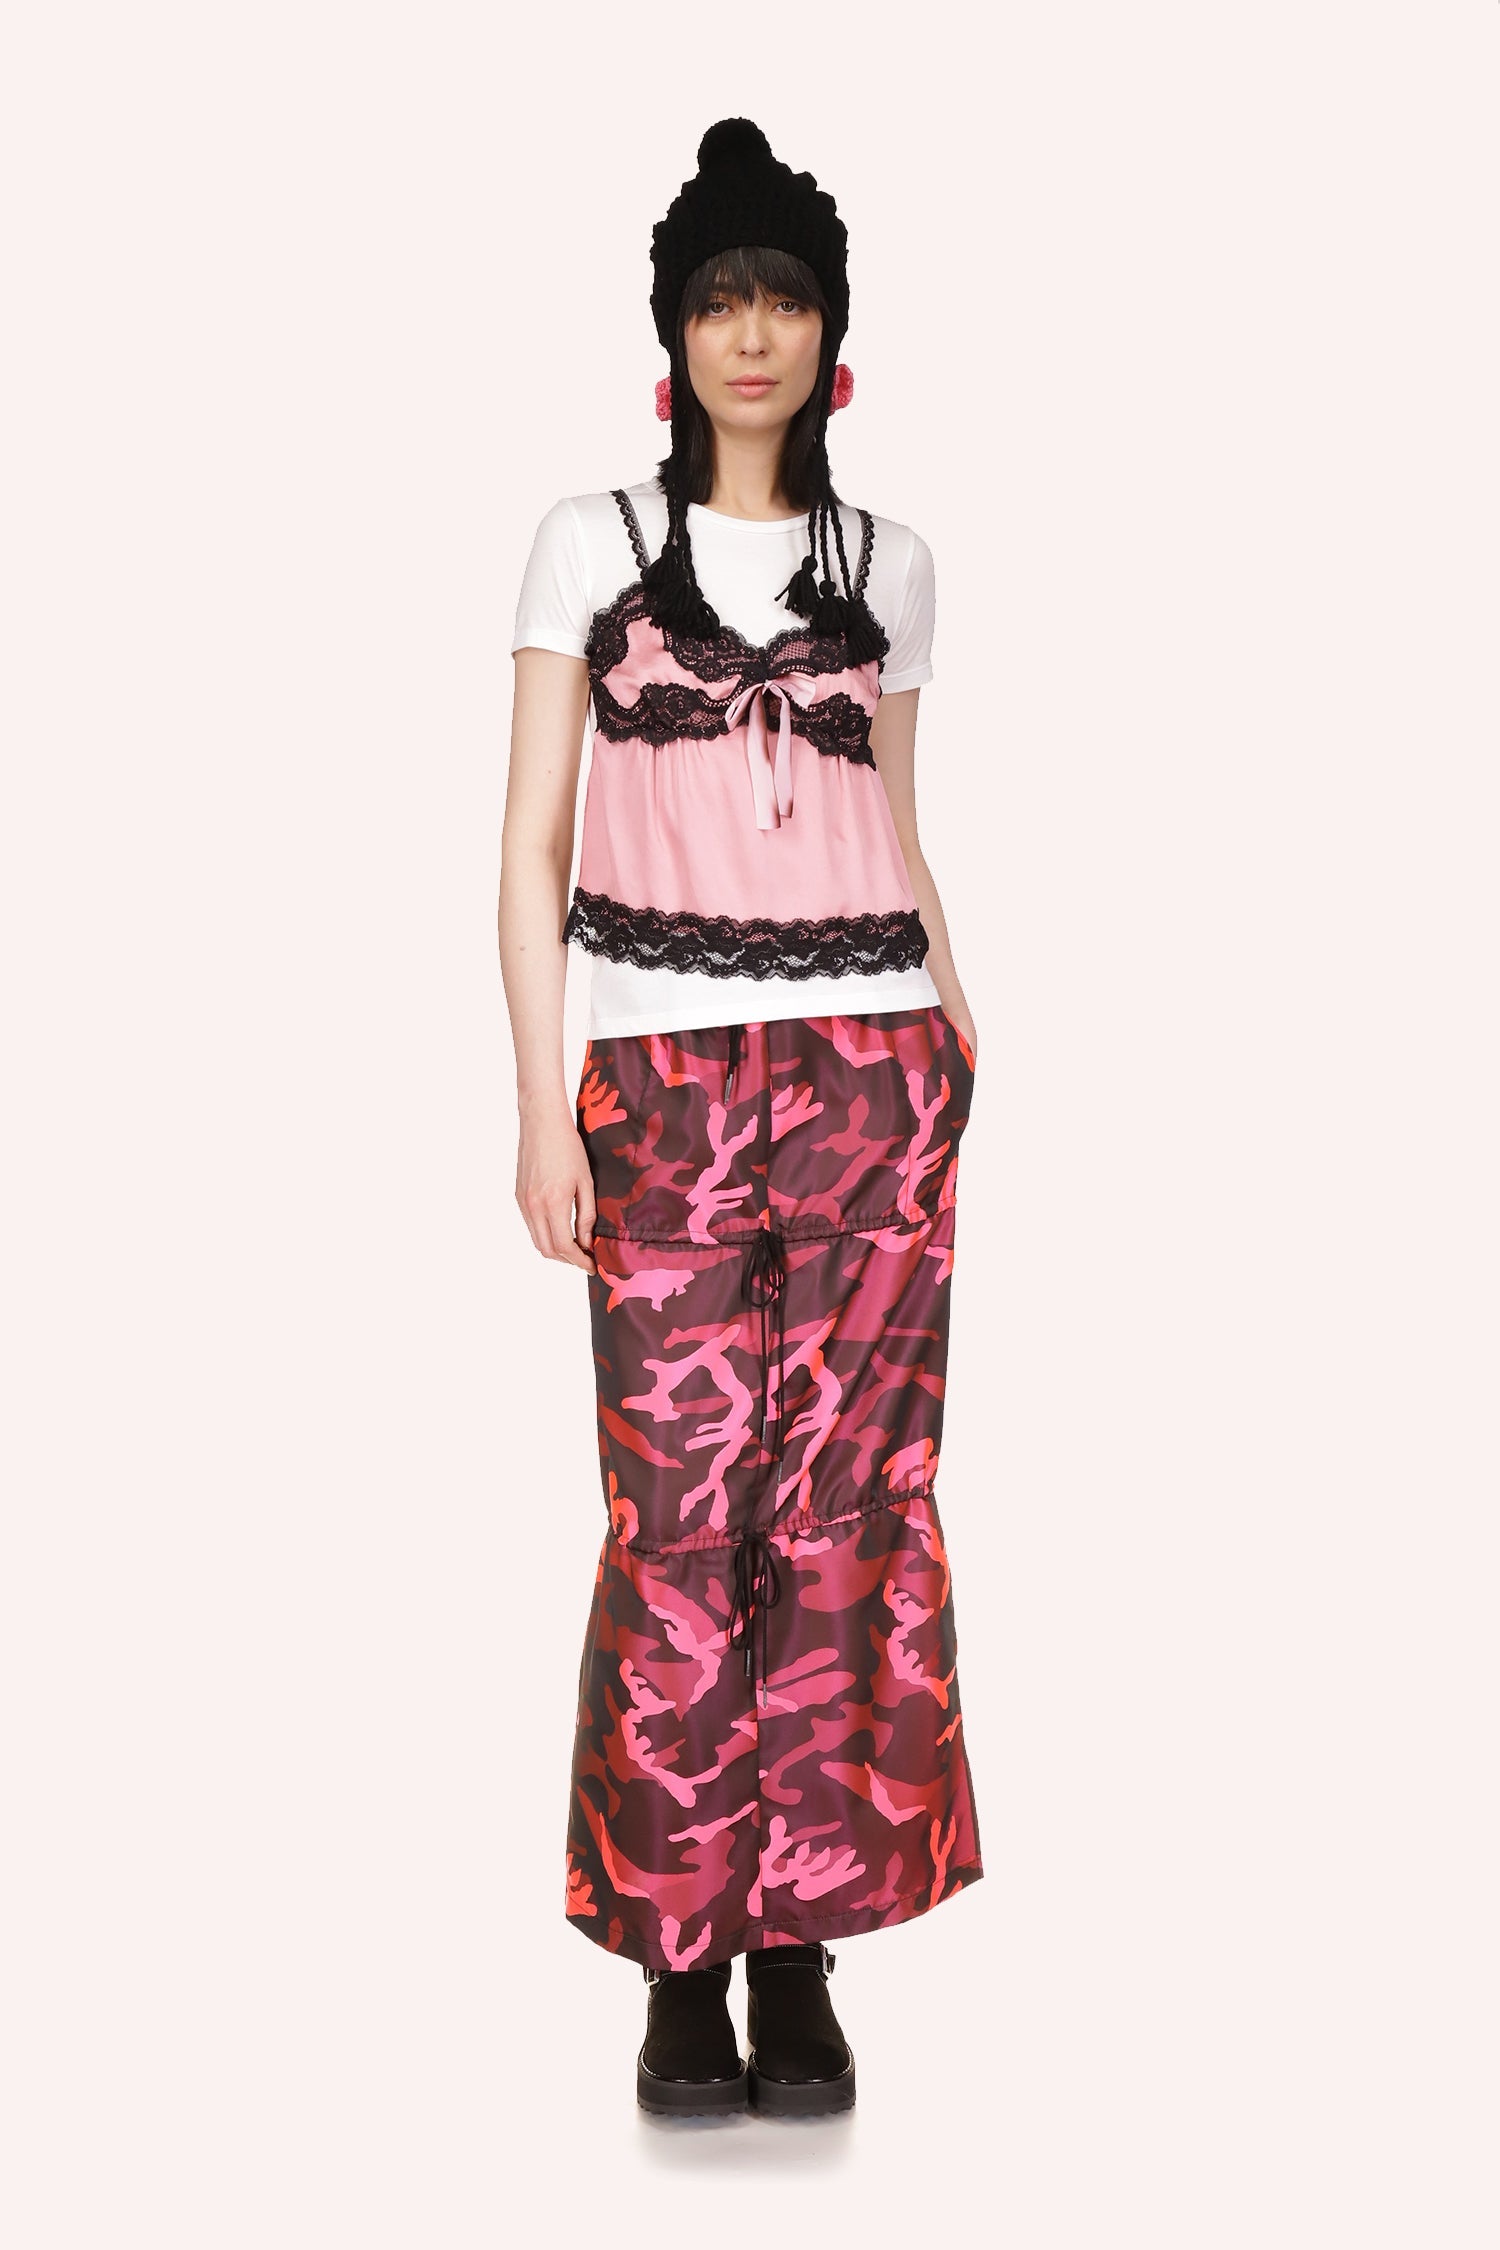 Camouflage-style skirt, dark pink, pink, light pink, 3 levels, side pocket, 2-lace adjust, cut on each side, ankles-long